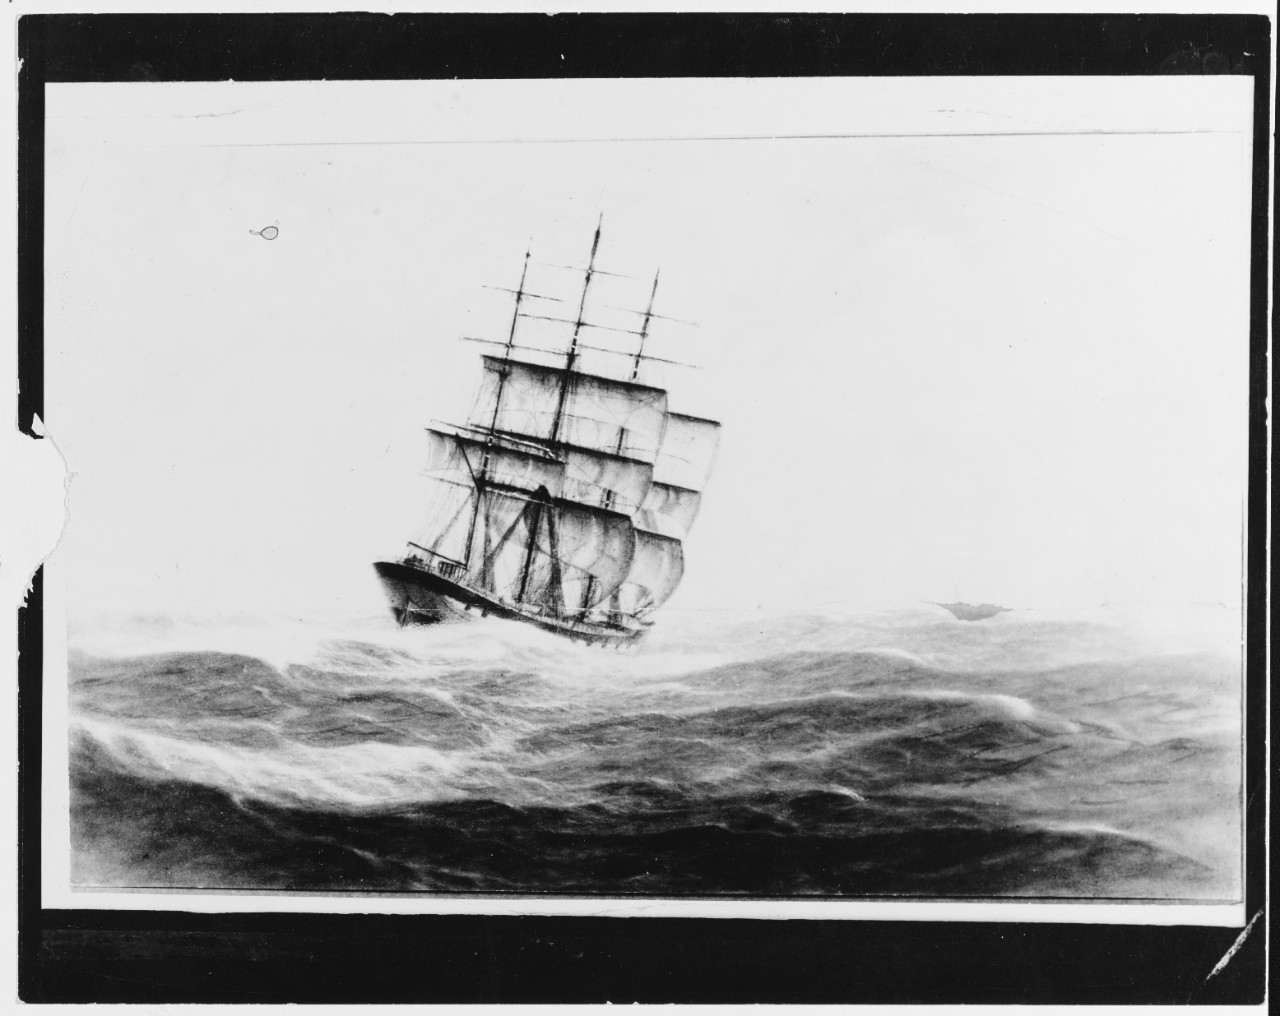 A full-rigged ship under sail